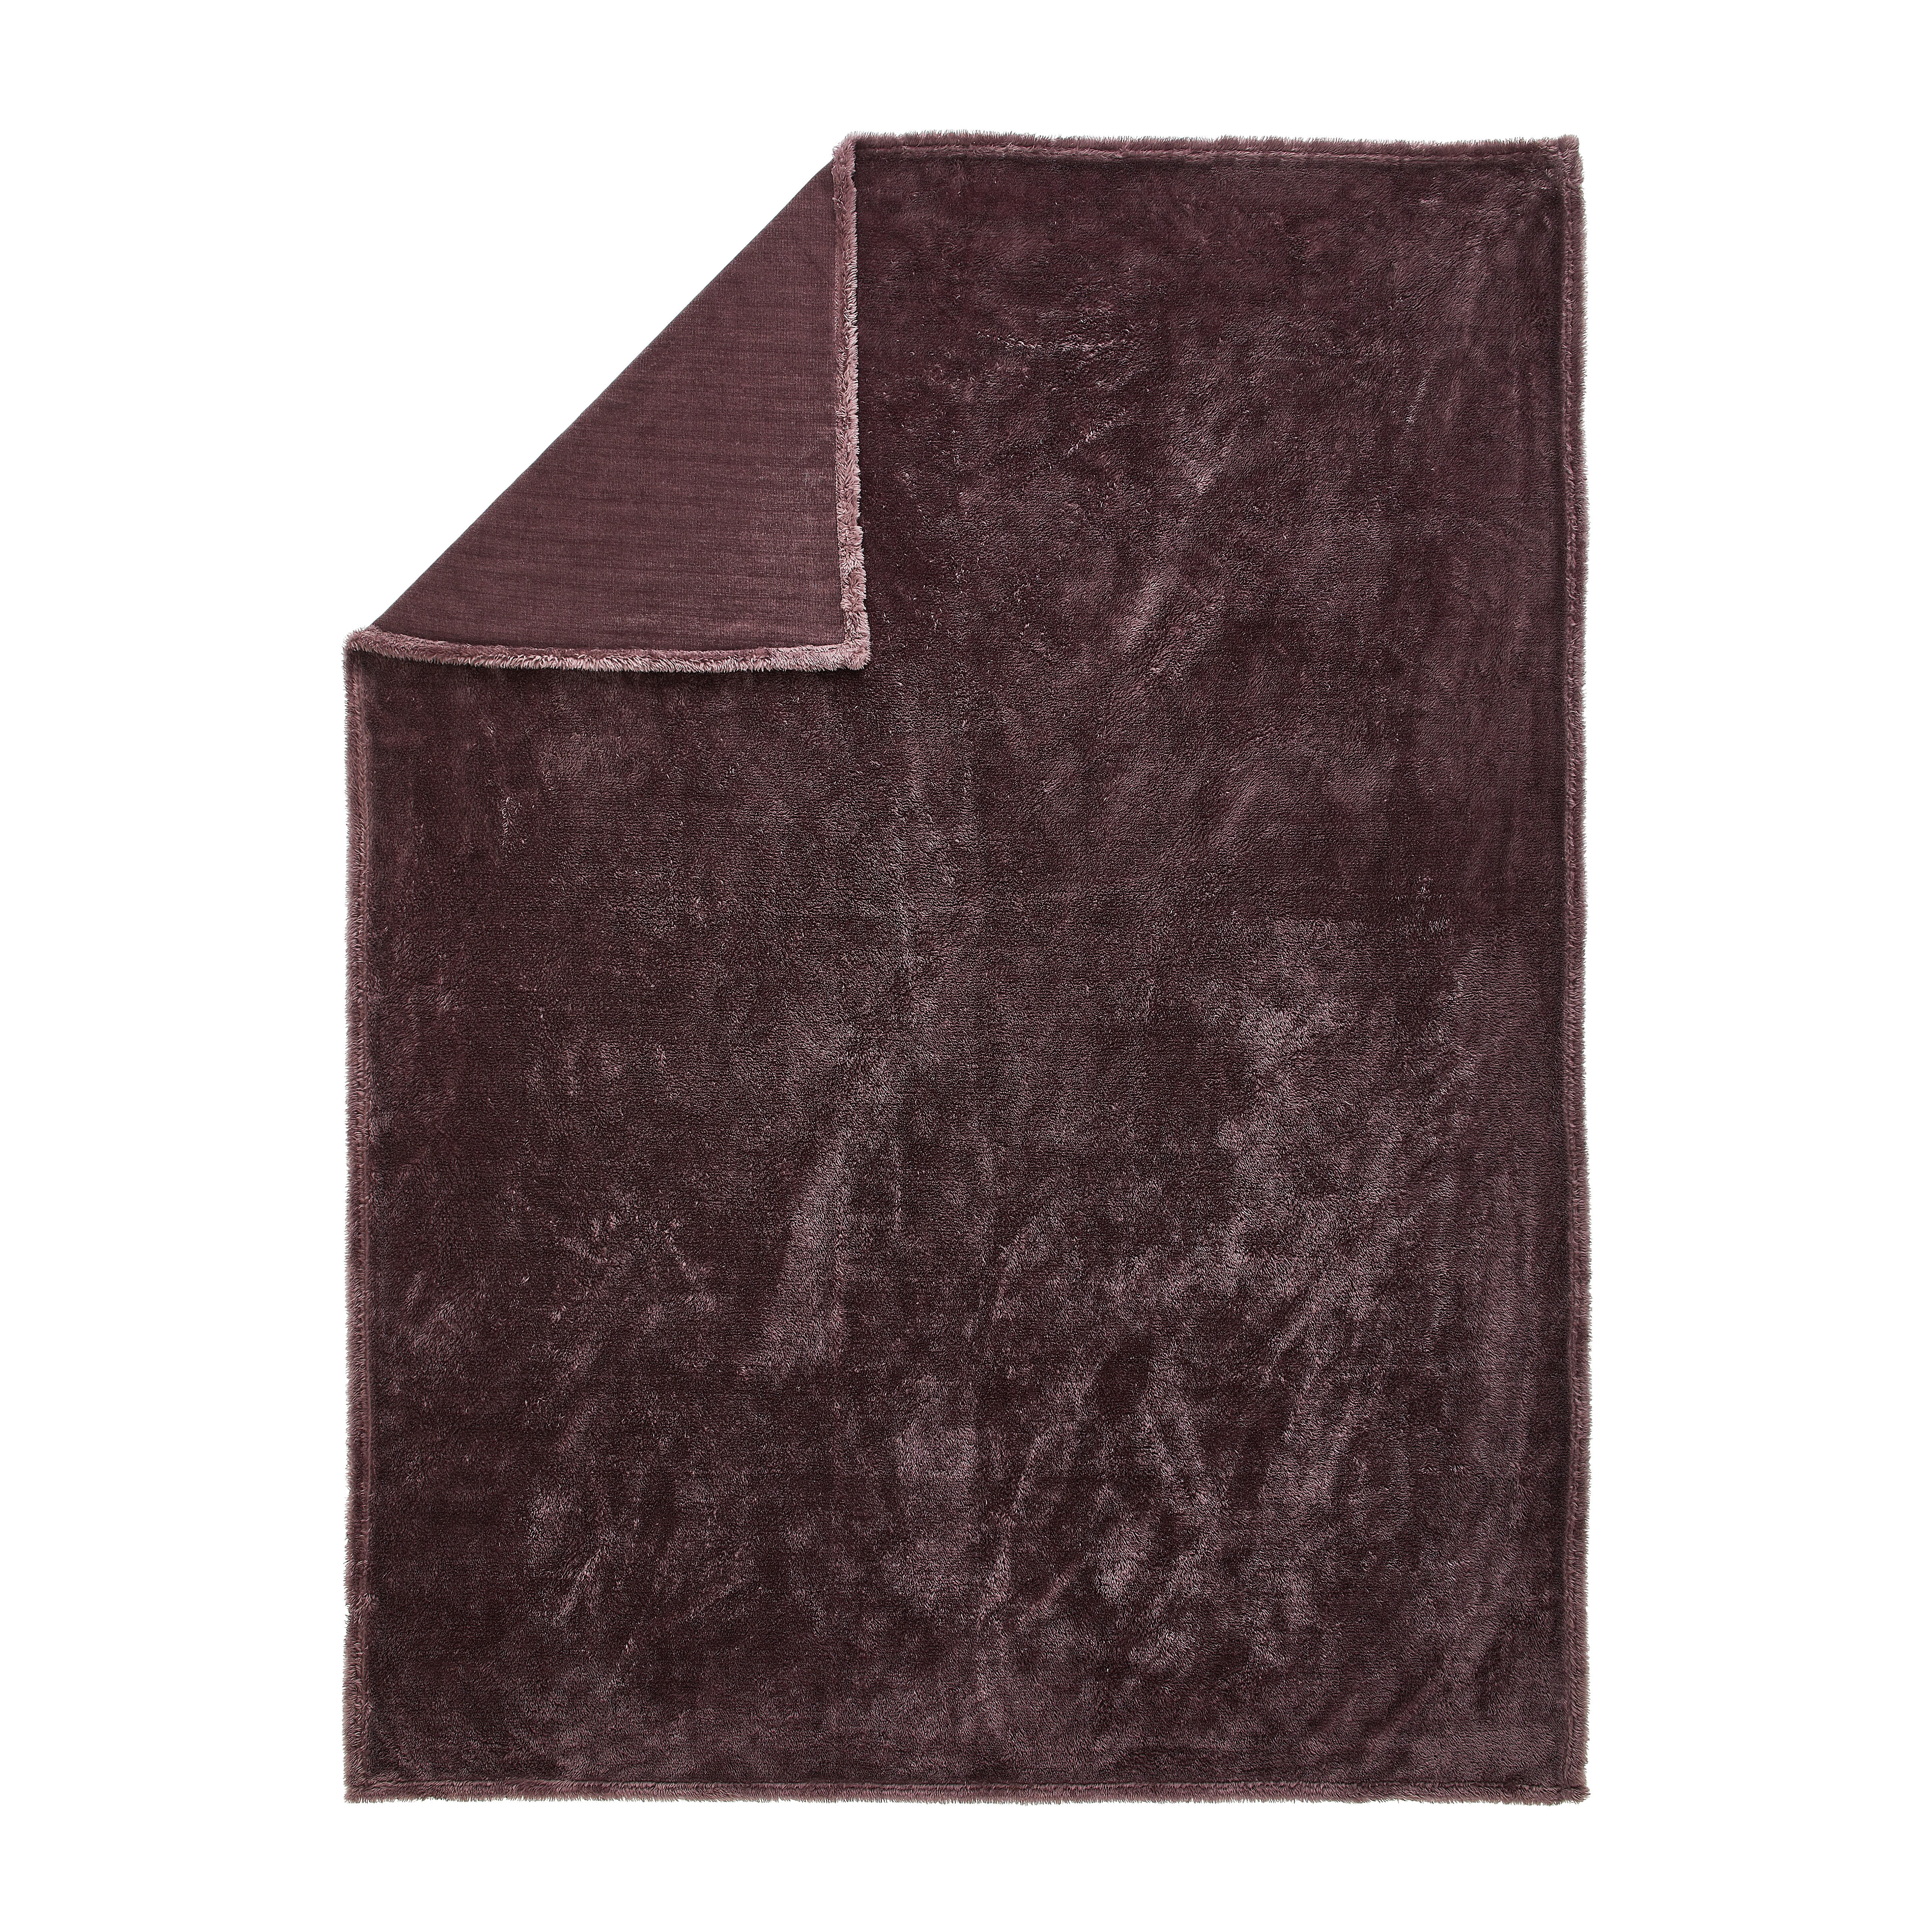 FELLDECKE Moraine 150/200 cm  - Beere, KONVENTIONELL, Textil (150/200cm) - Novel